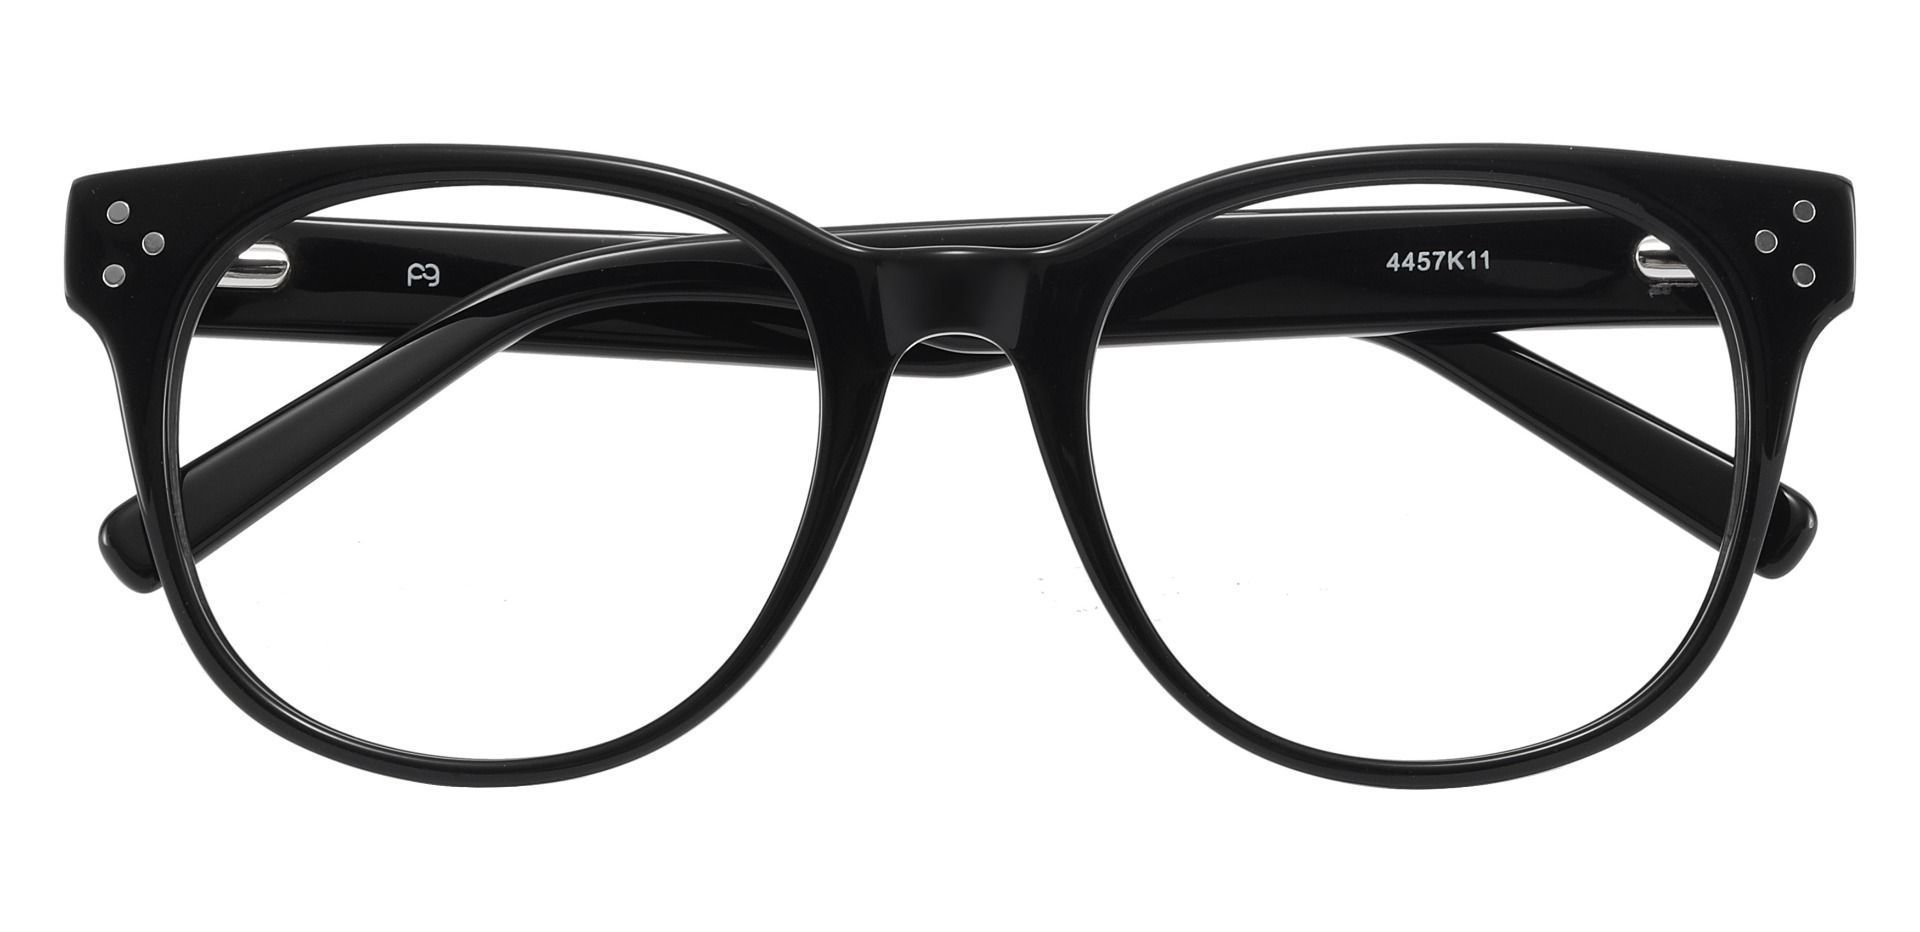 Orwell Oval Eyeglasses Frame - Black